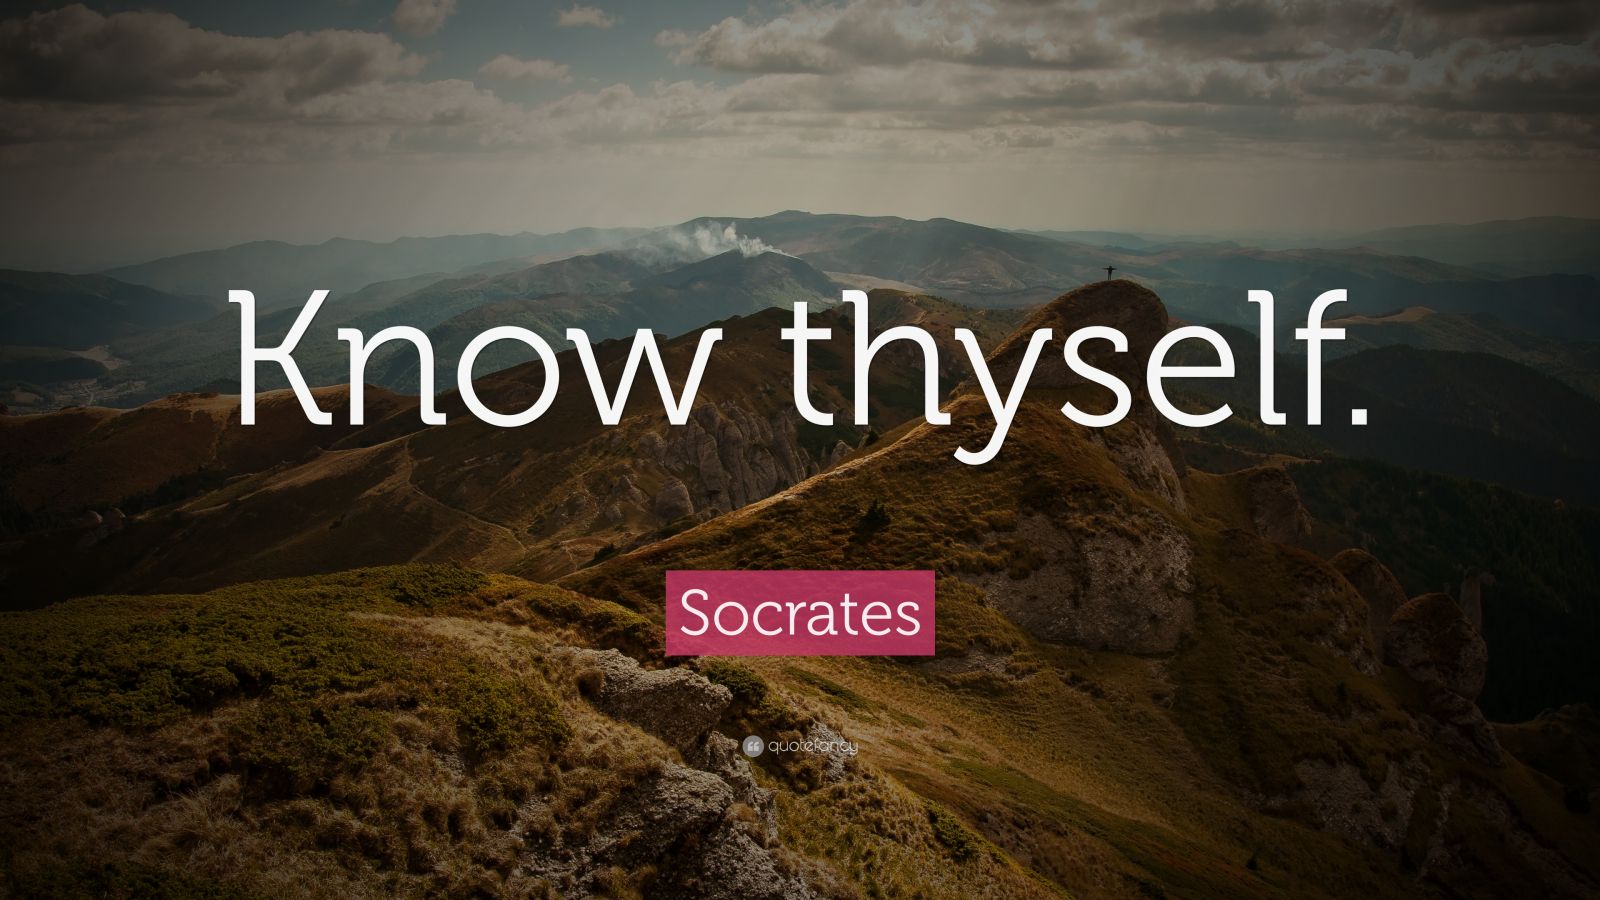 4675099 Socrates Quote Know thyself